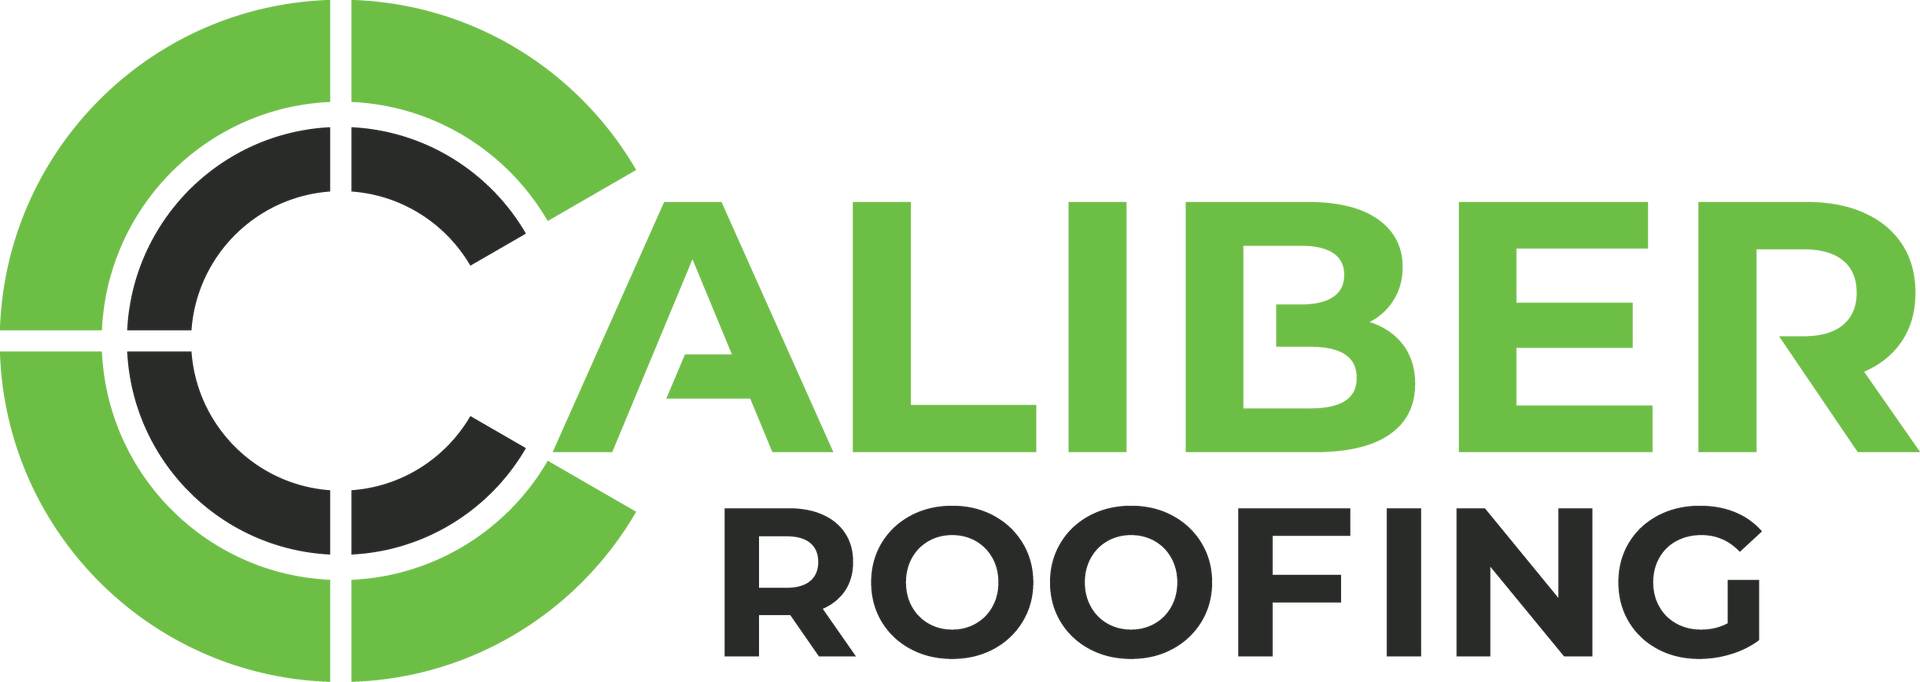 Caliber Roofing | Logo